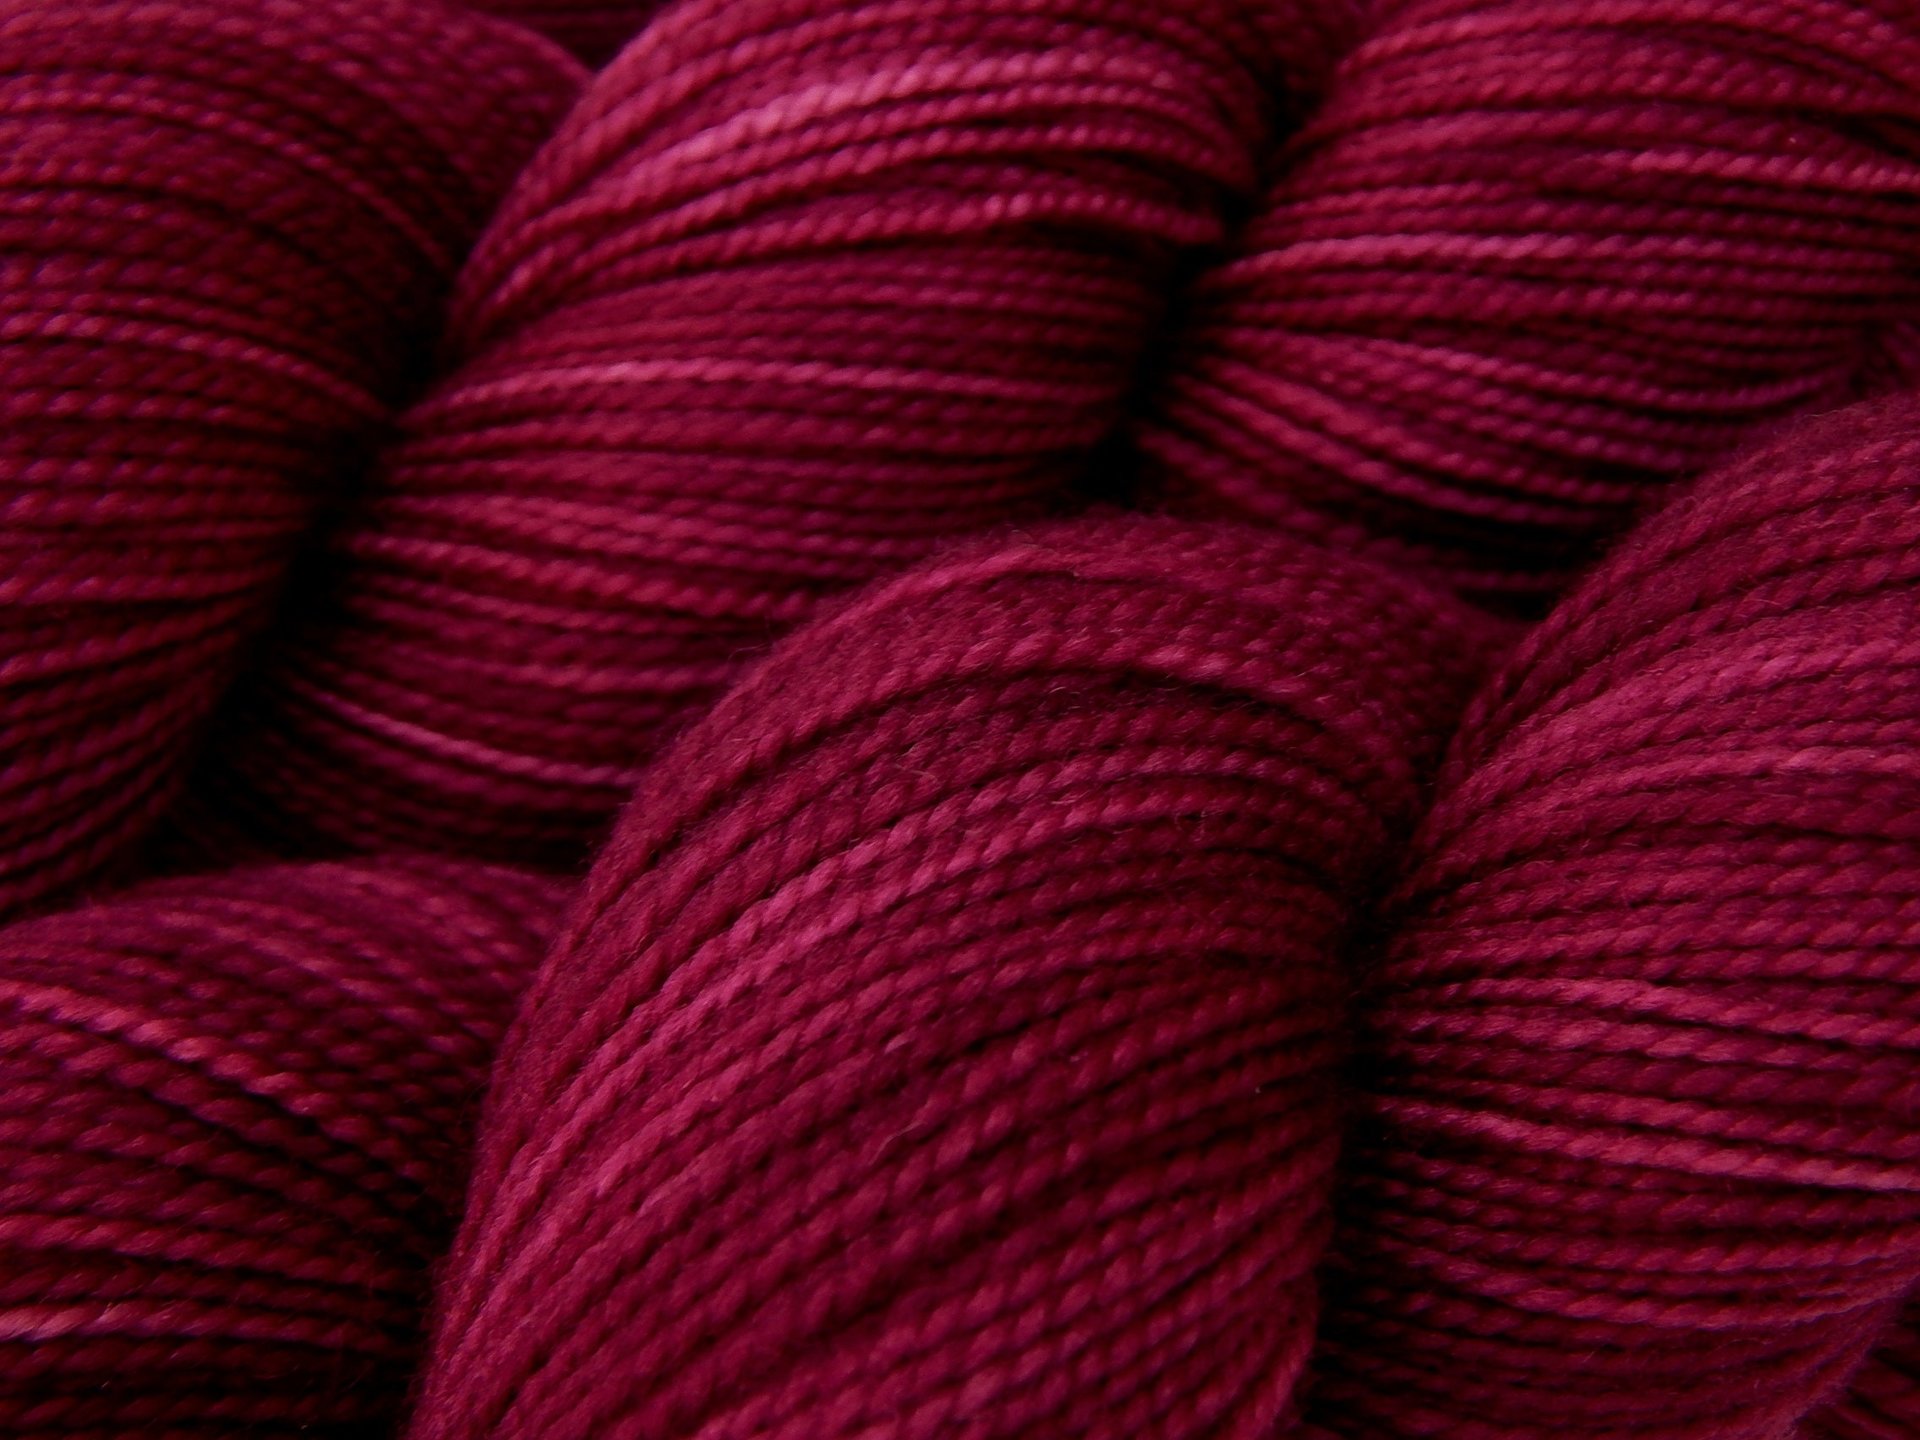 Hand Dyed Yarn, Sock Fingering Superwash Merino Wool - Plumberry - Tonal Knitting Yarn, Indie Dyer Red Berry Semisolid Hand Dyed Sock Yarn